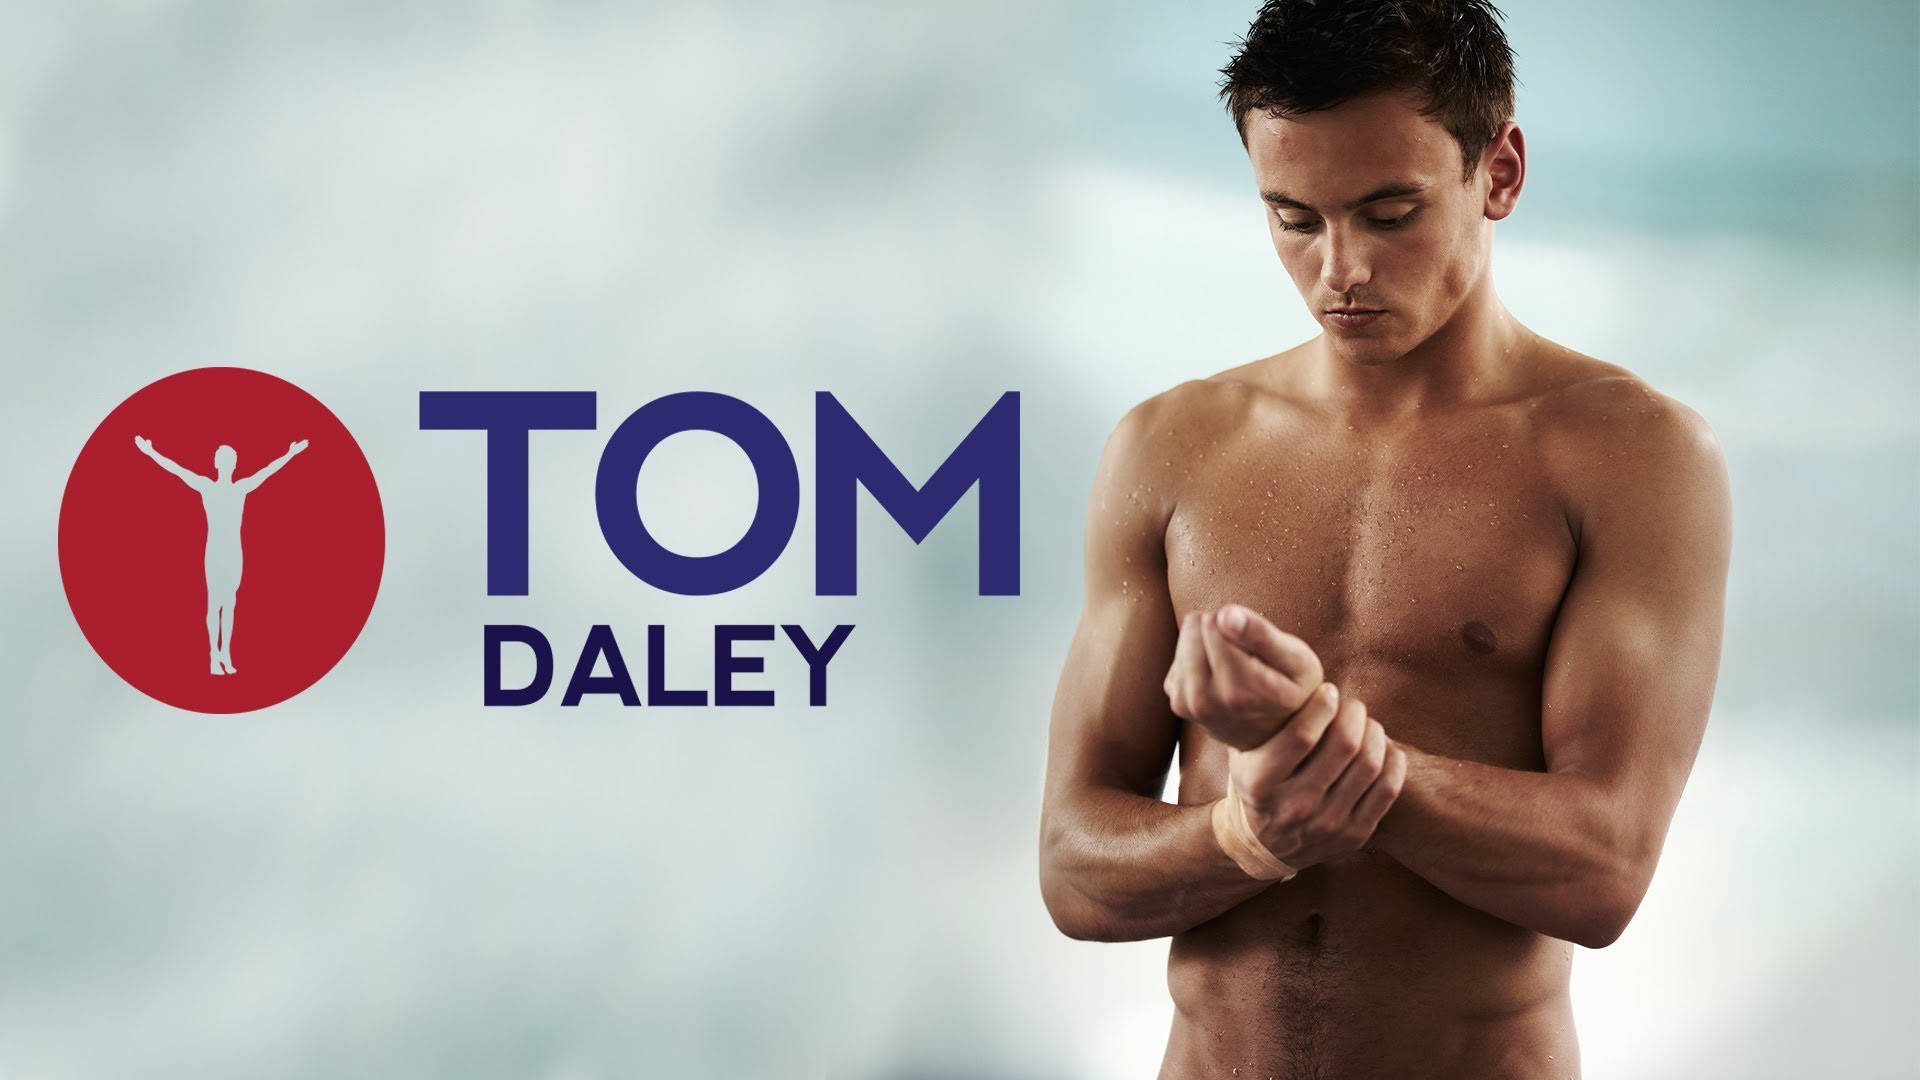 Tom Daley Logo Tapet: Se de cool og unikke design med den britiske dykker Tom Daley logo! Wallpaper